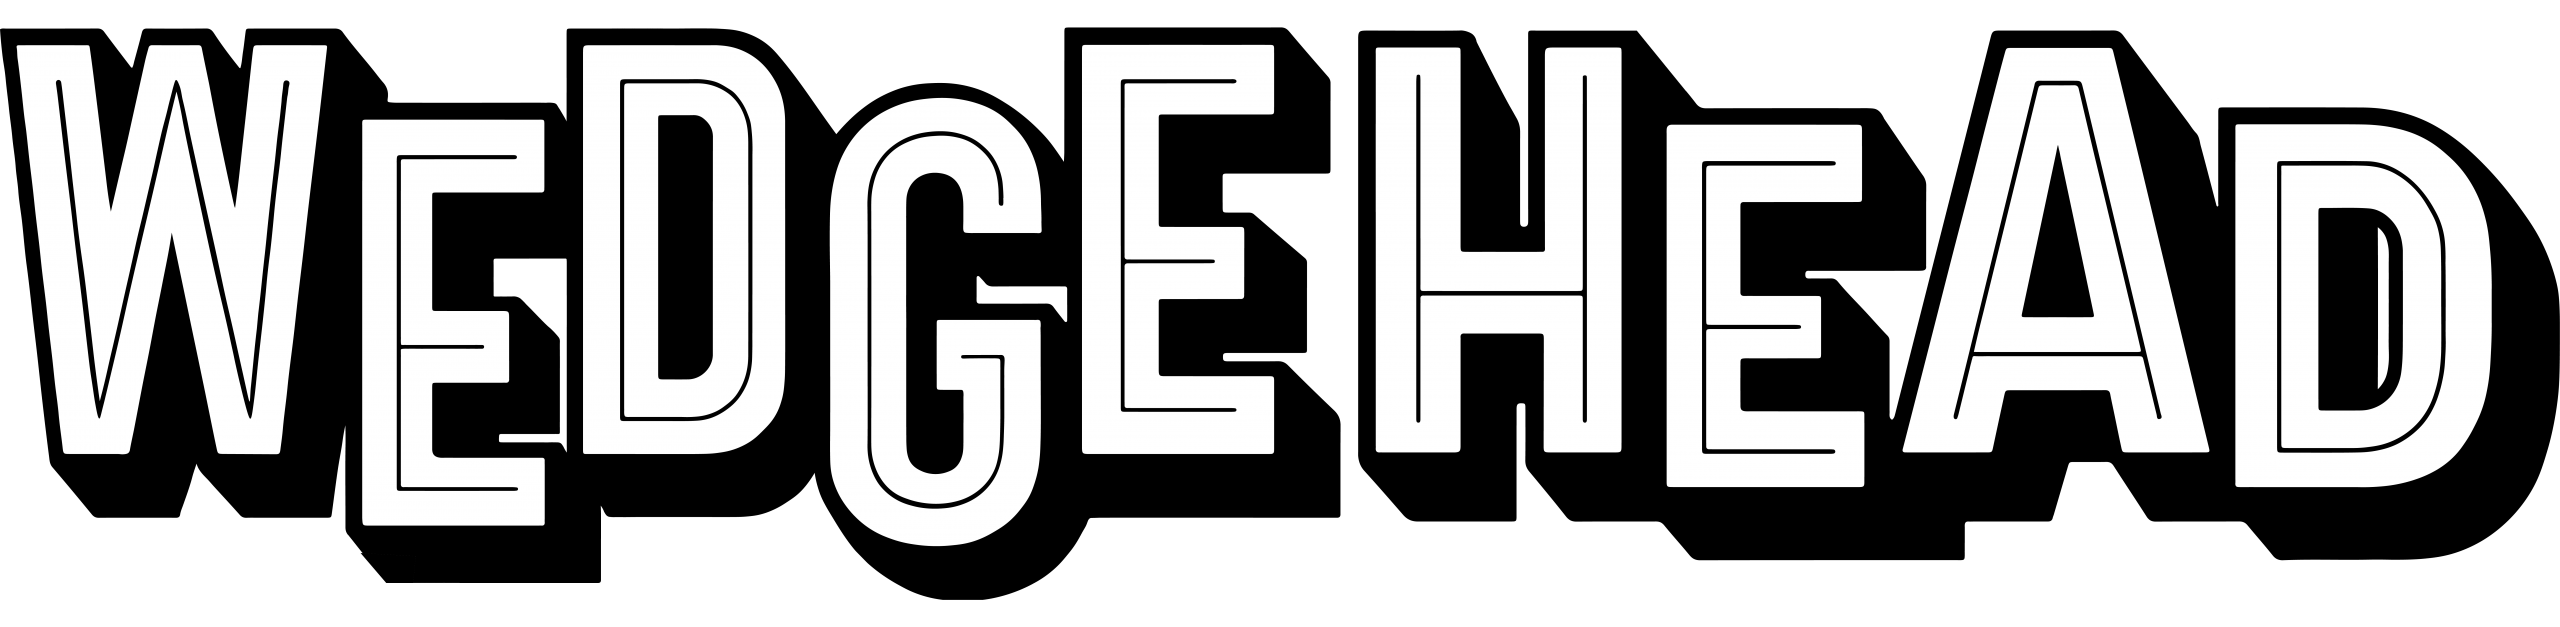 Wedgehead Pinball Arcade logo